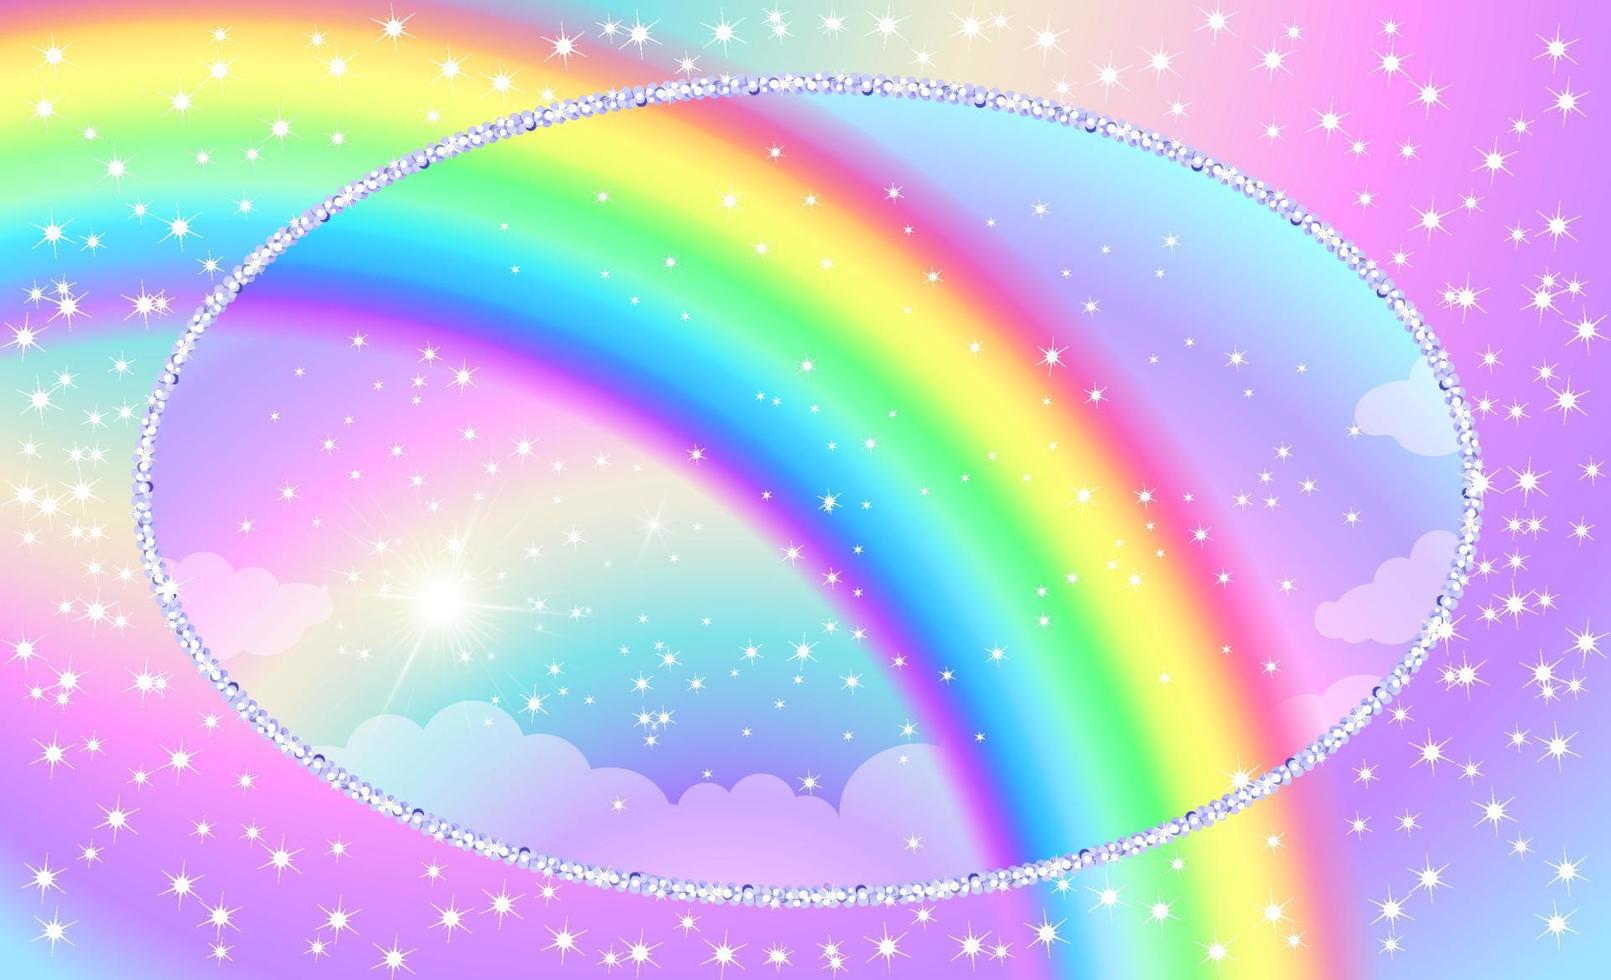 fantasia sfondo di Magia arcobaleno cielo con scintille e luccichio. vettore